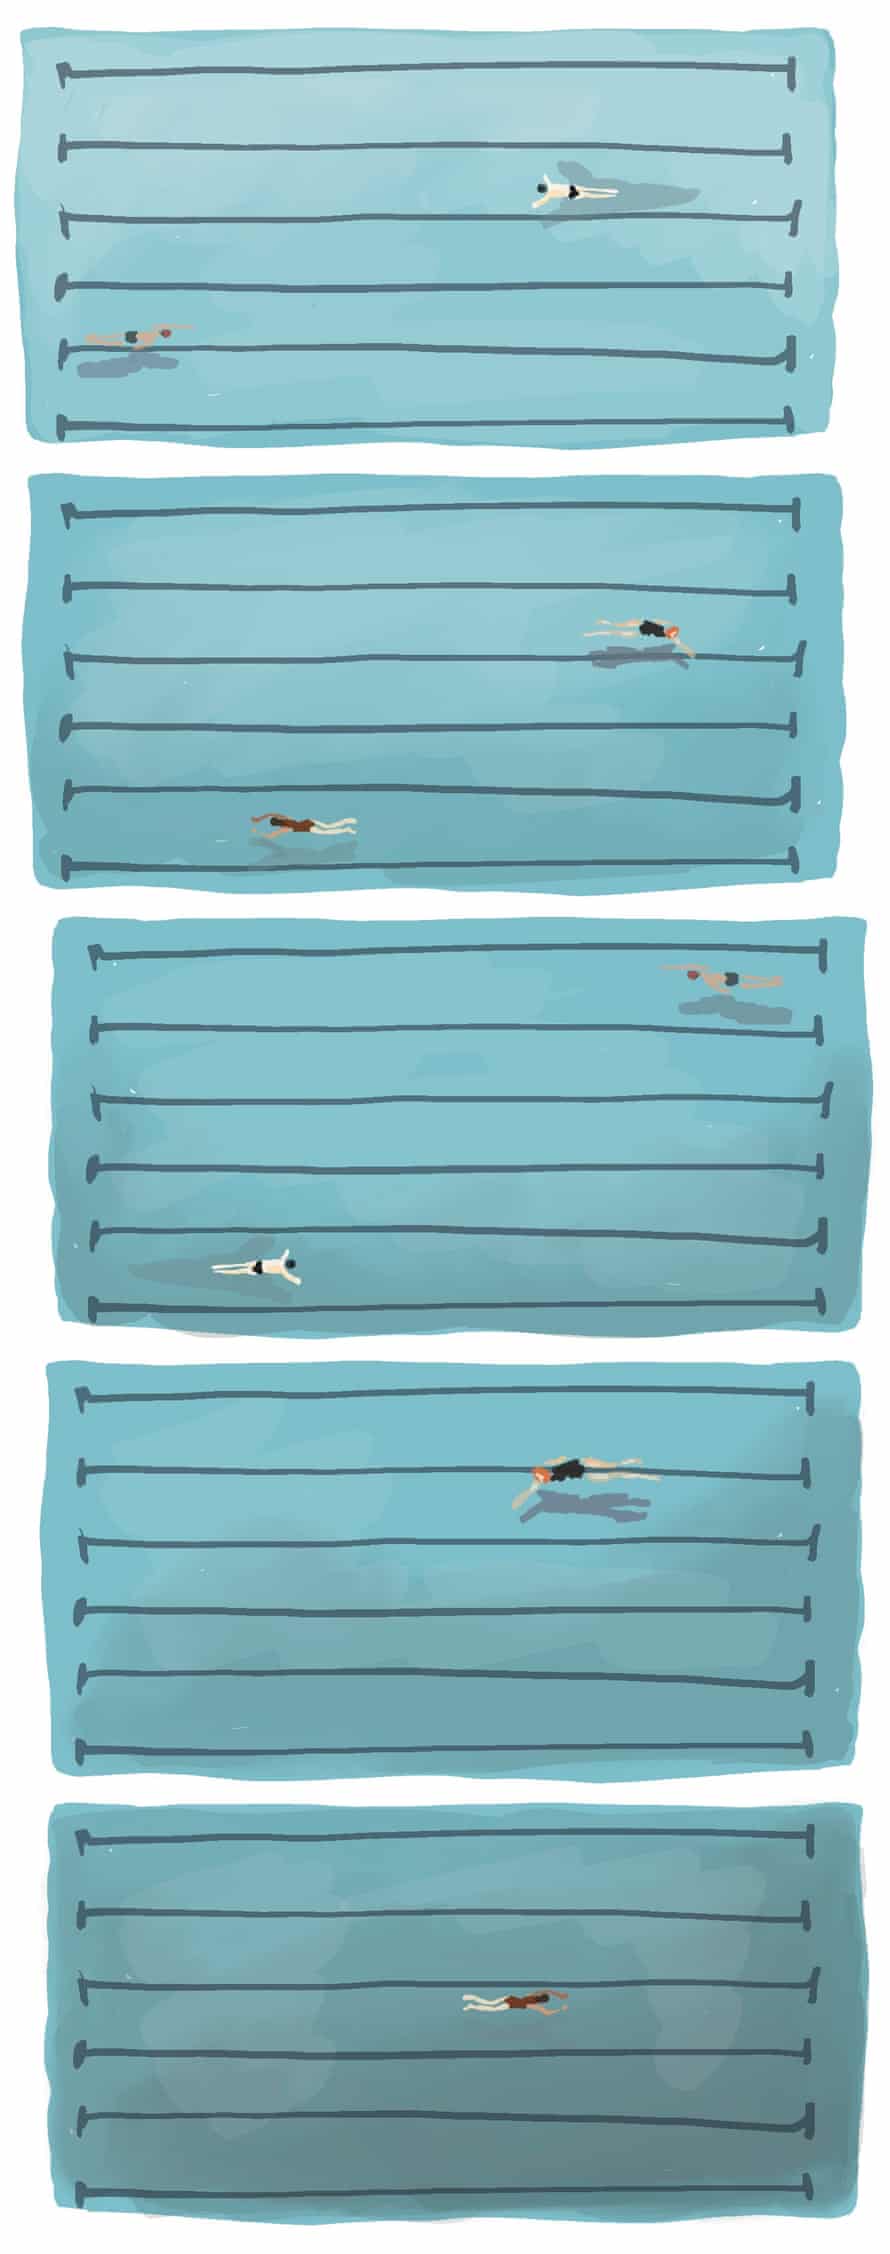 Illustration de piscines olympiques.